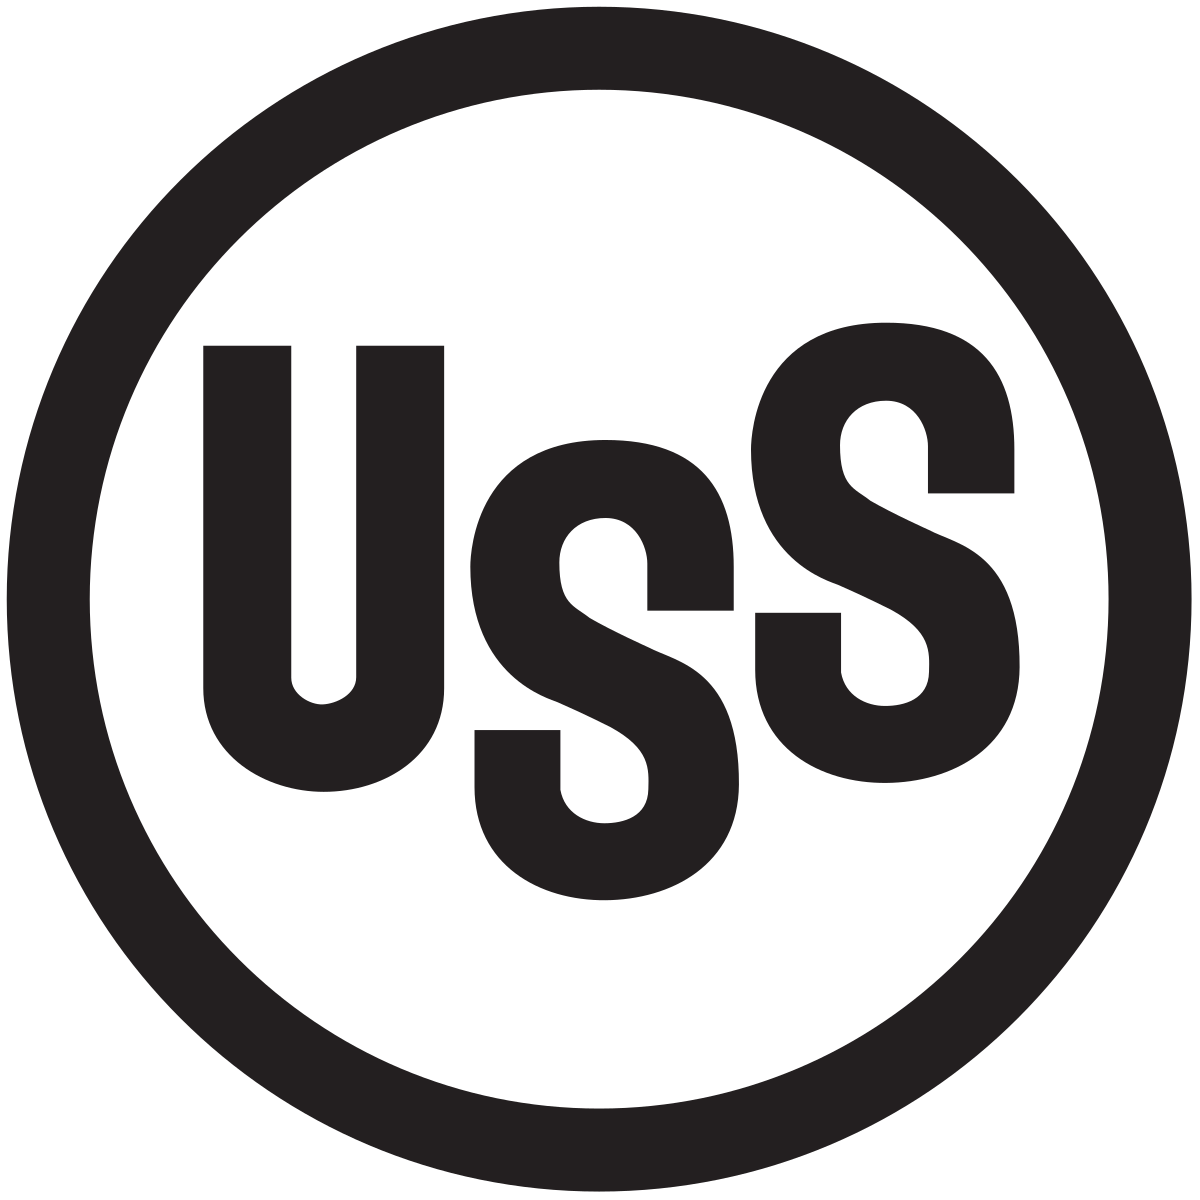 US Steel logo of USS in circle